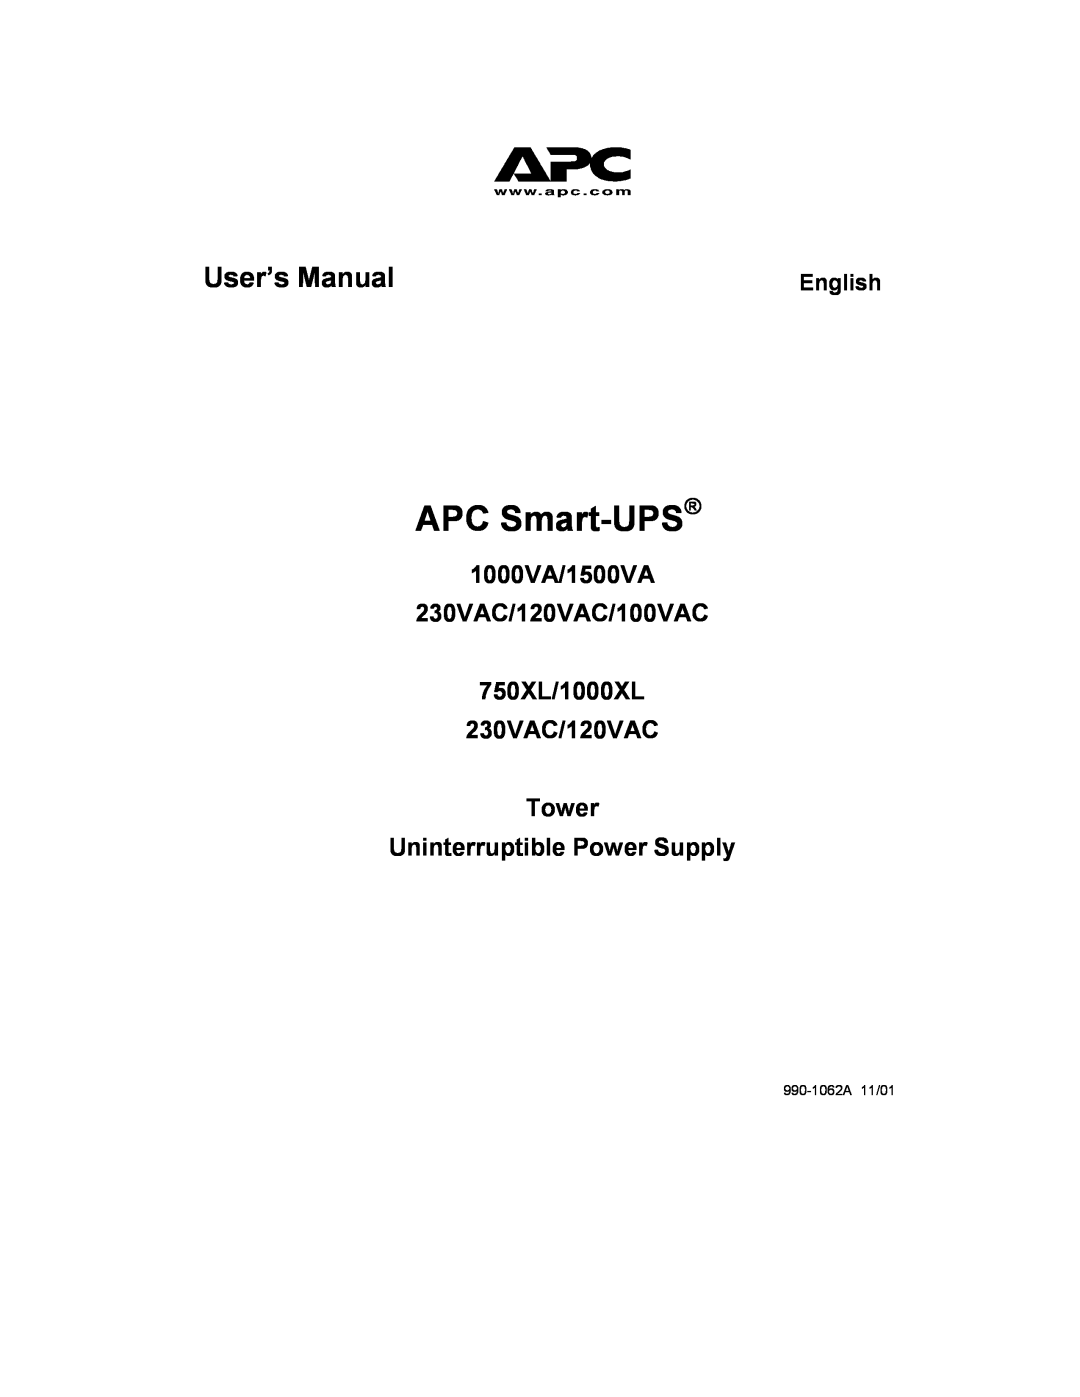 APC 230VAC, 120VAC, 100VAC user manual User’s Manual, APC Smart-UPS, 990-1319, 09/02 